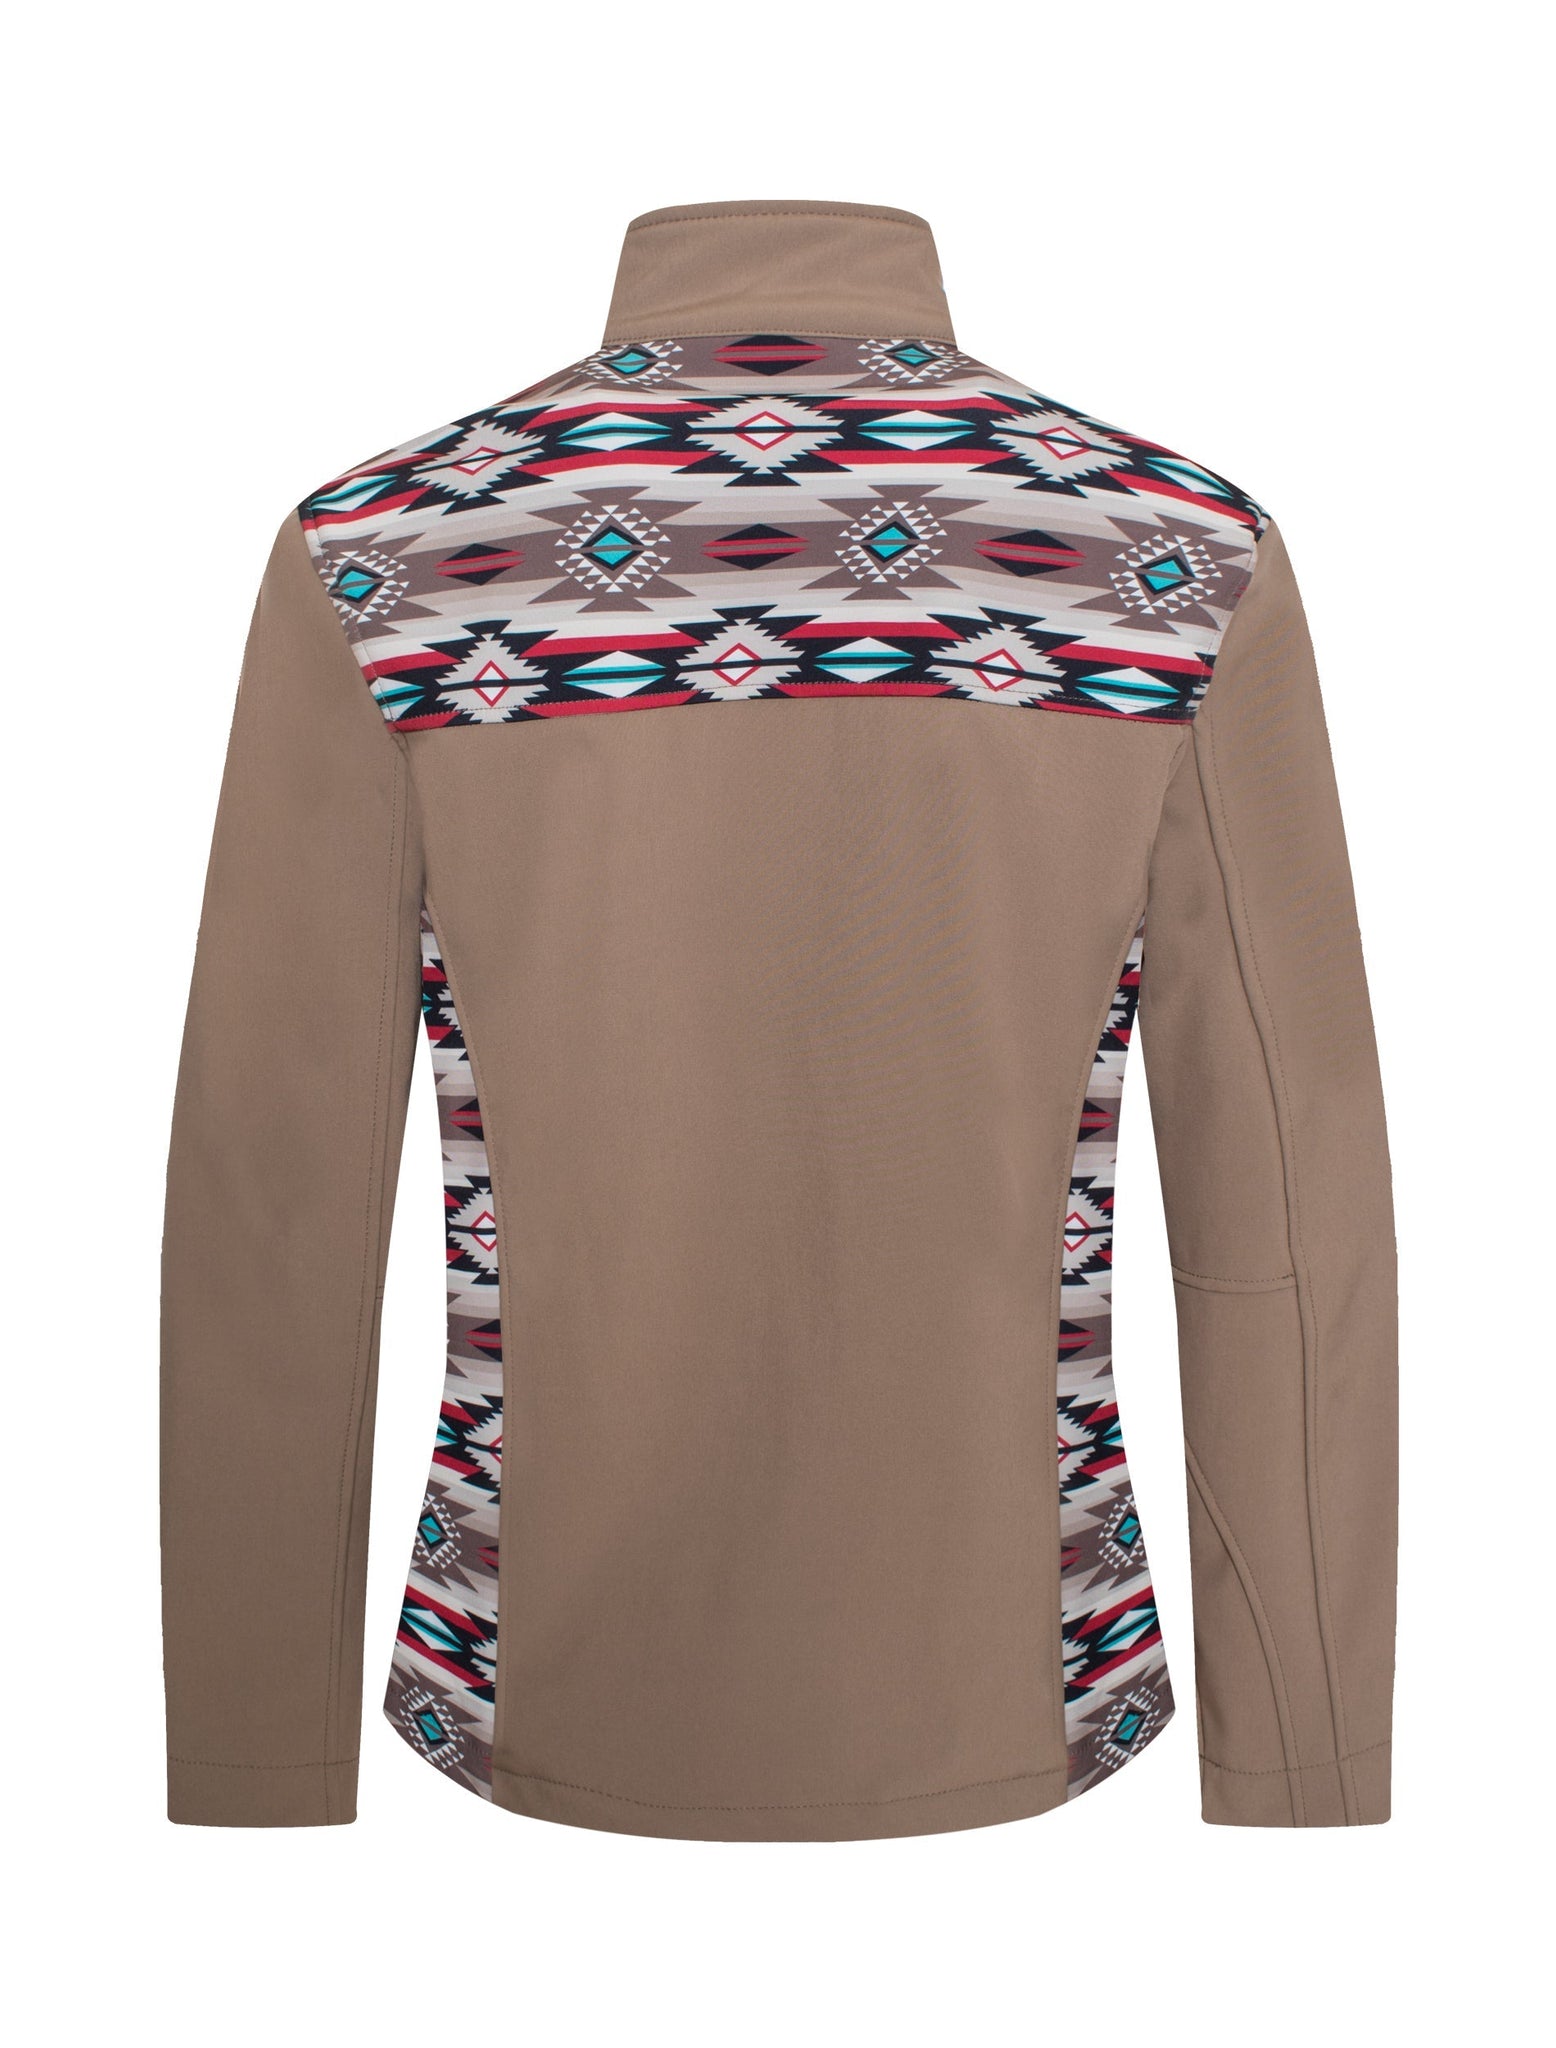 Women's Western Aztec Print Jacket -LJ650EMB-AZ-KHAKI-BROWN